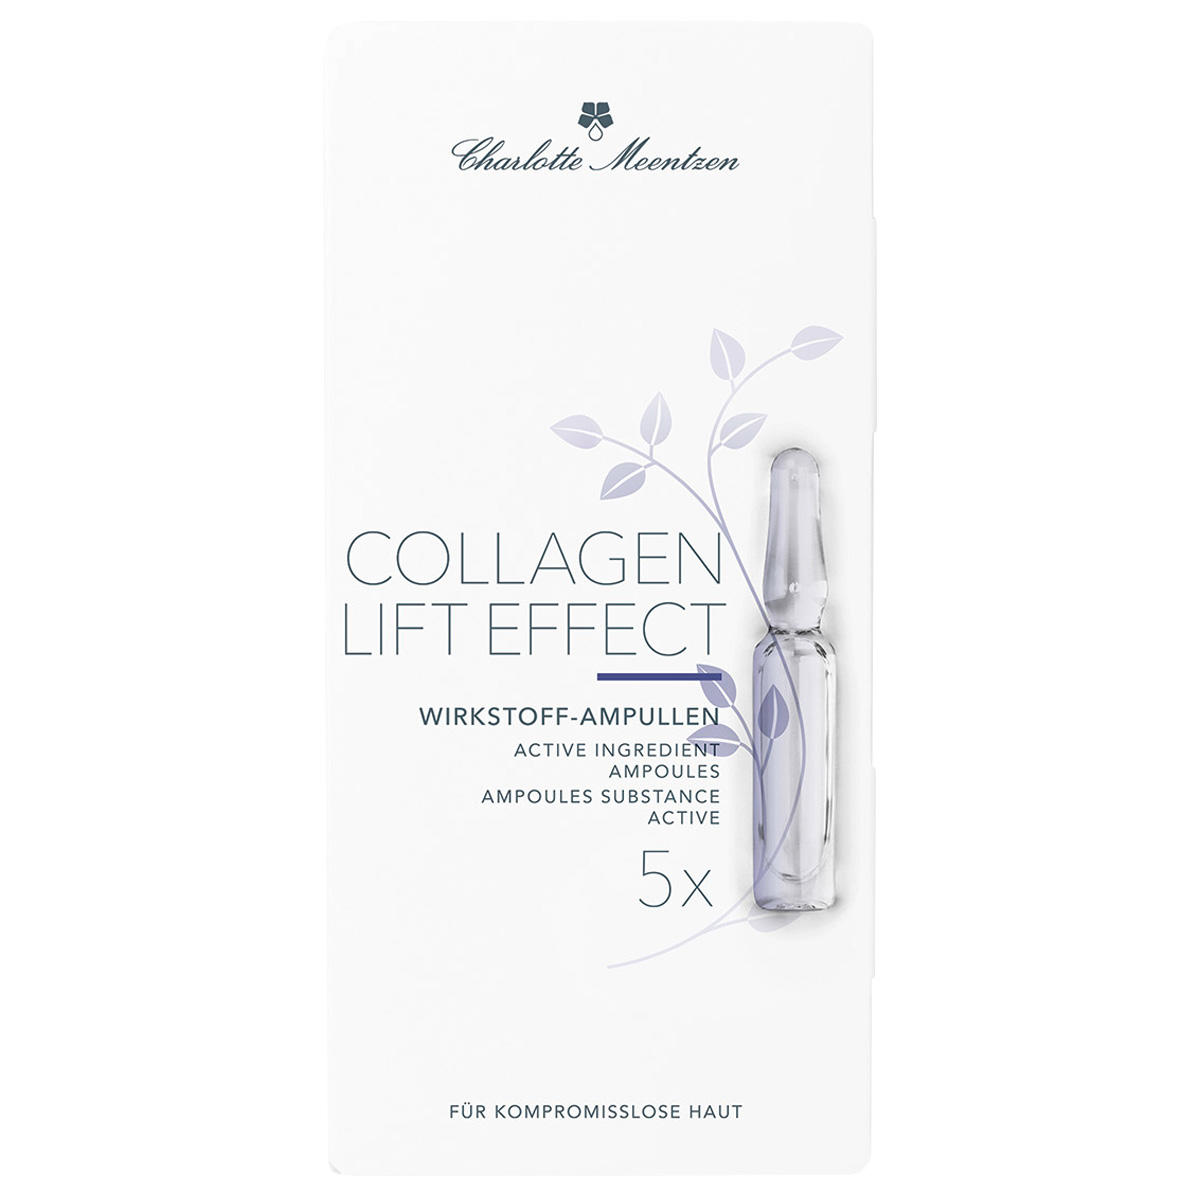 Charlotte Meentzen Collagen Lift Effect 5 x 2 ml Ampulle - 2